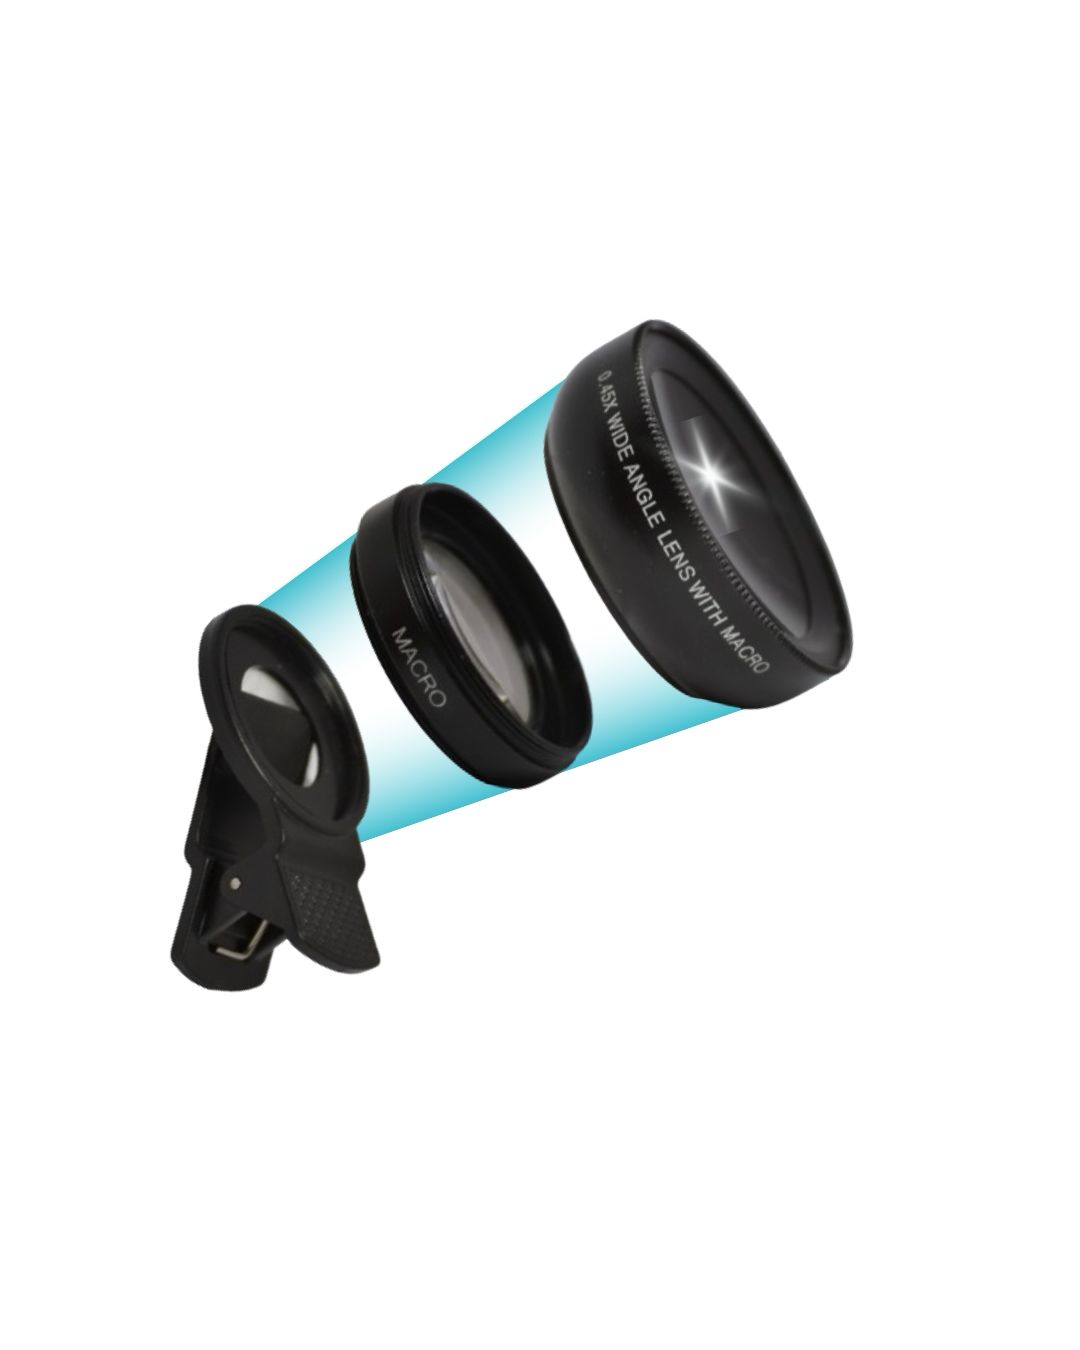 Macro Phone Lens Kit